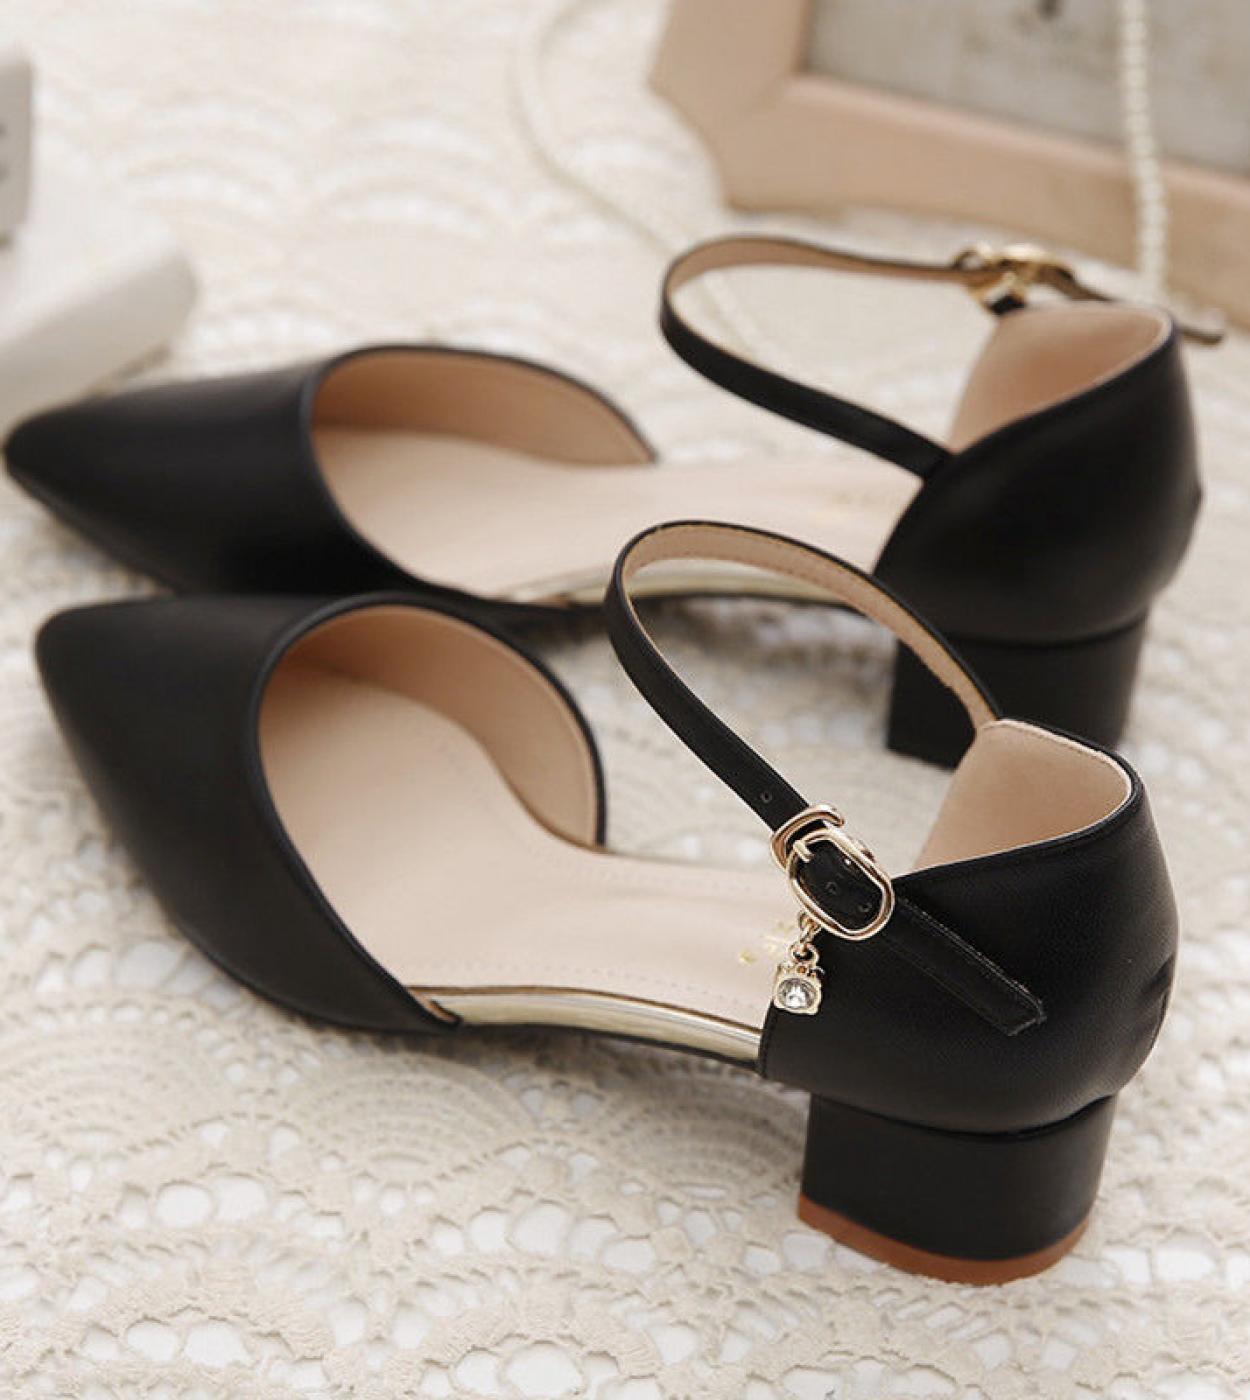 Fashion Low Heel Ladies High Heels Sweet Love Pointed Toe Pumps-Black |  Jumia Nigeria